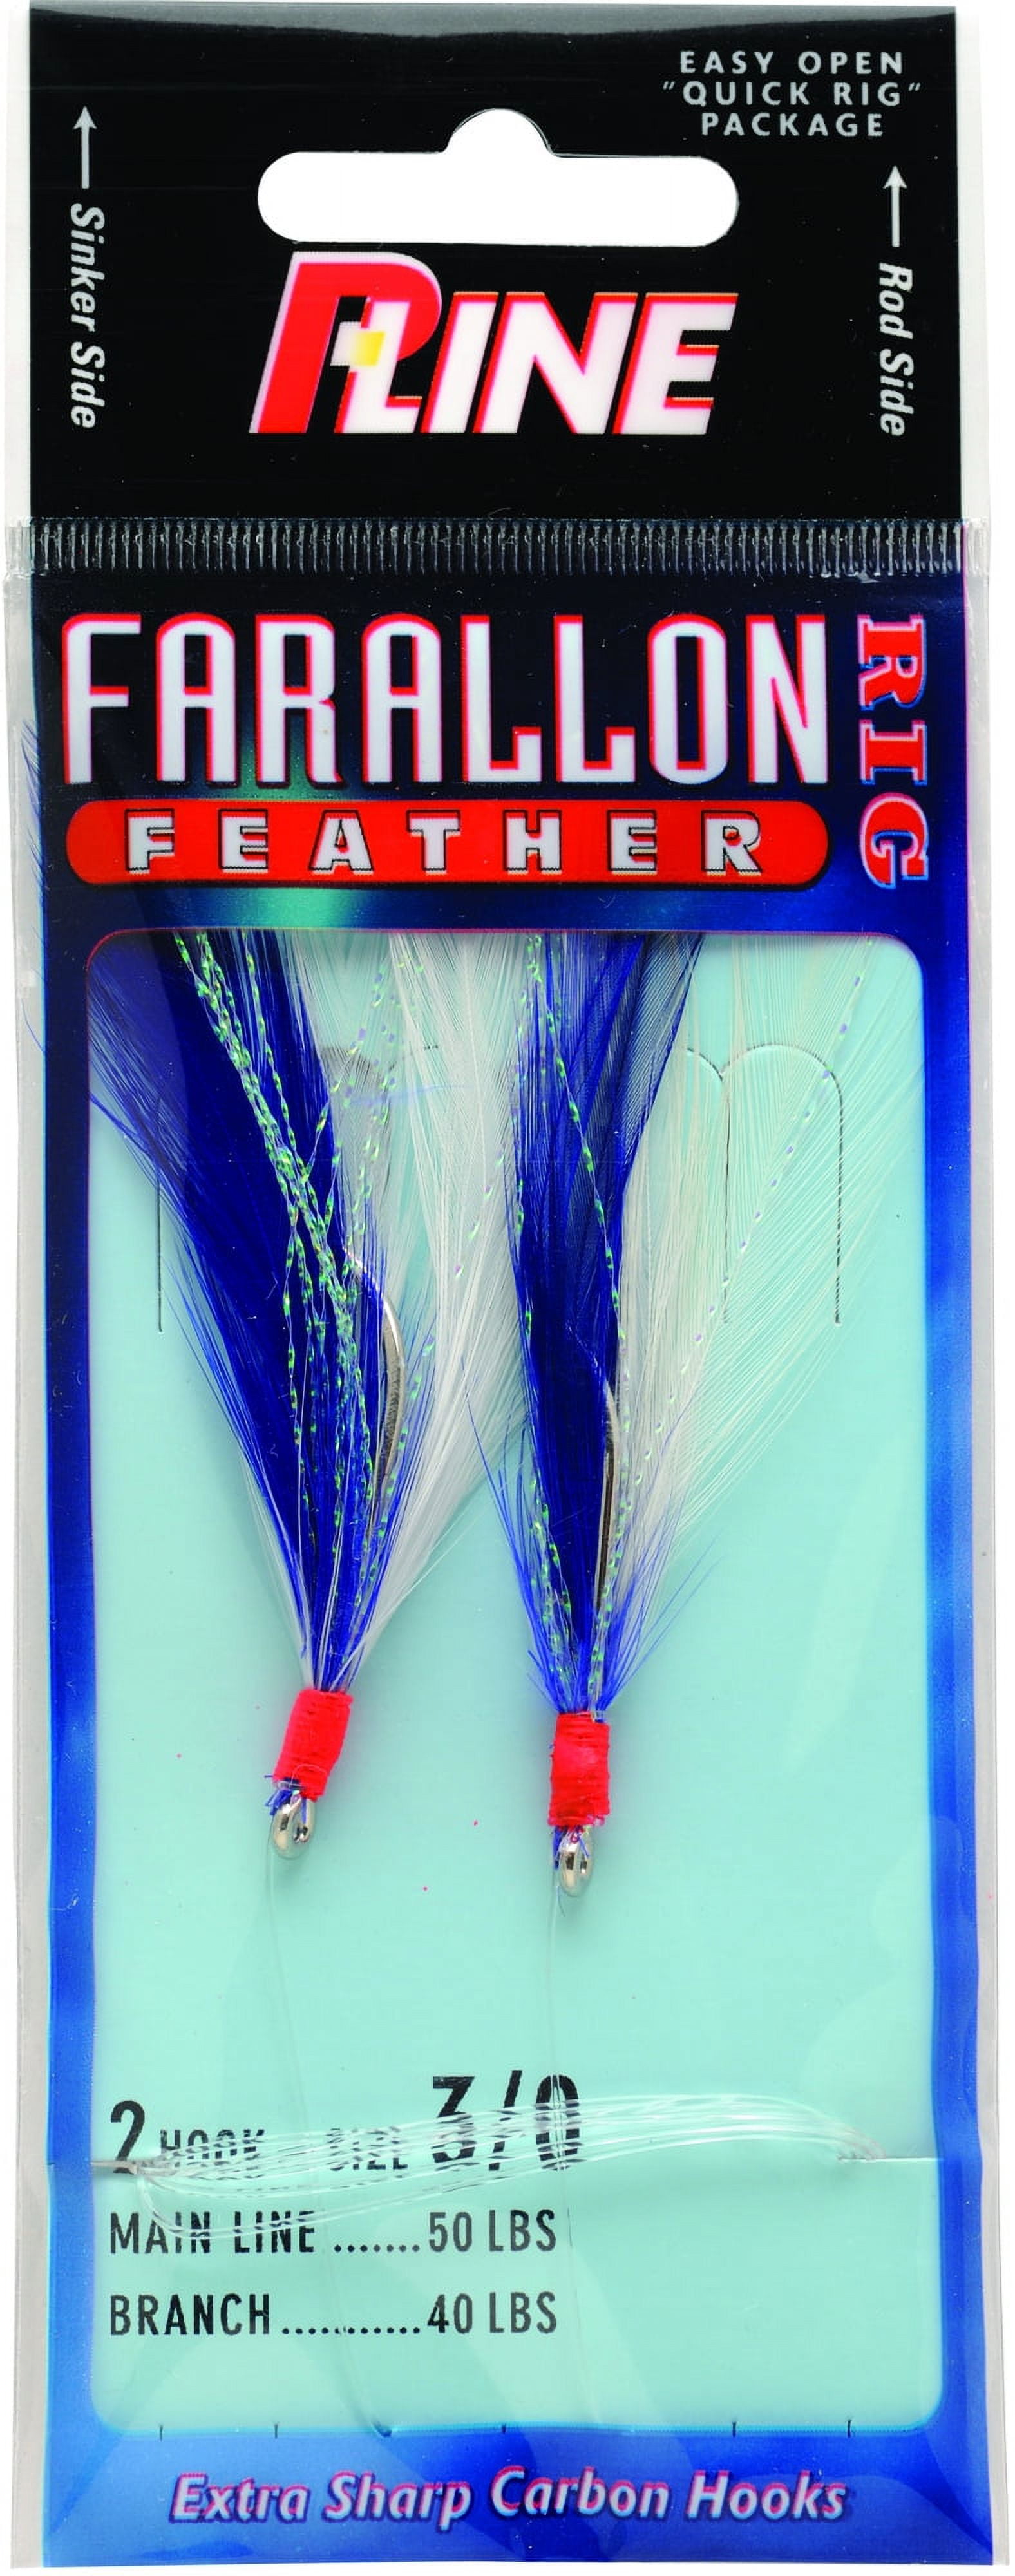 P-Line Farallon Feather 2 Hook, 5/0 BL/W